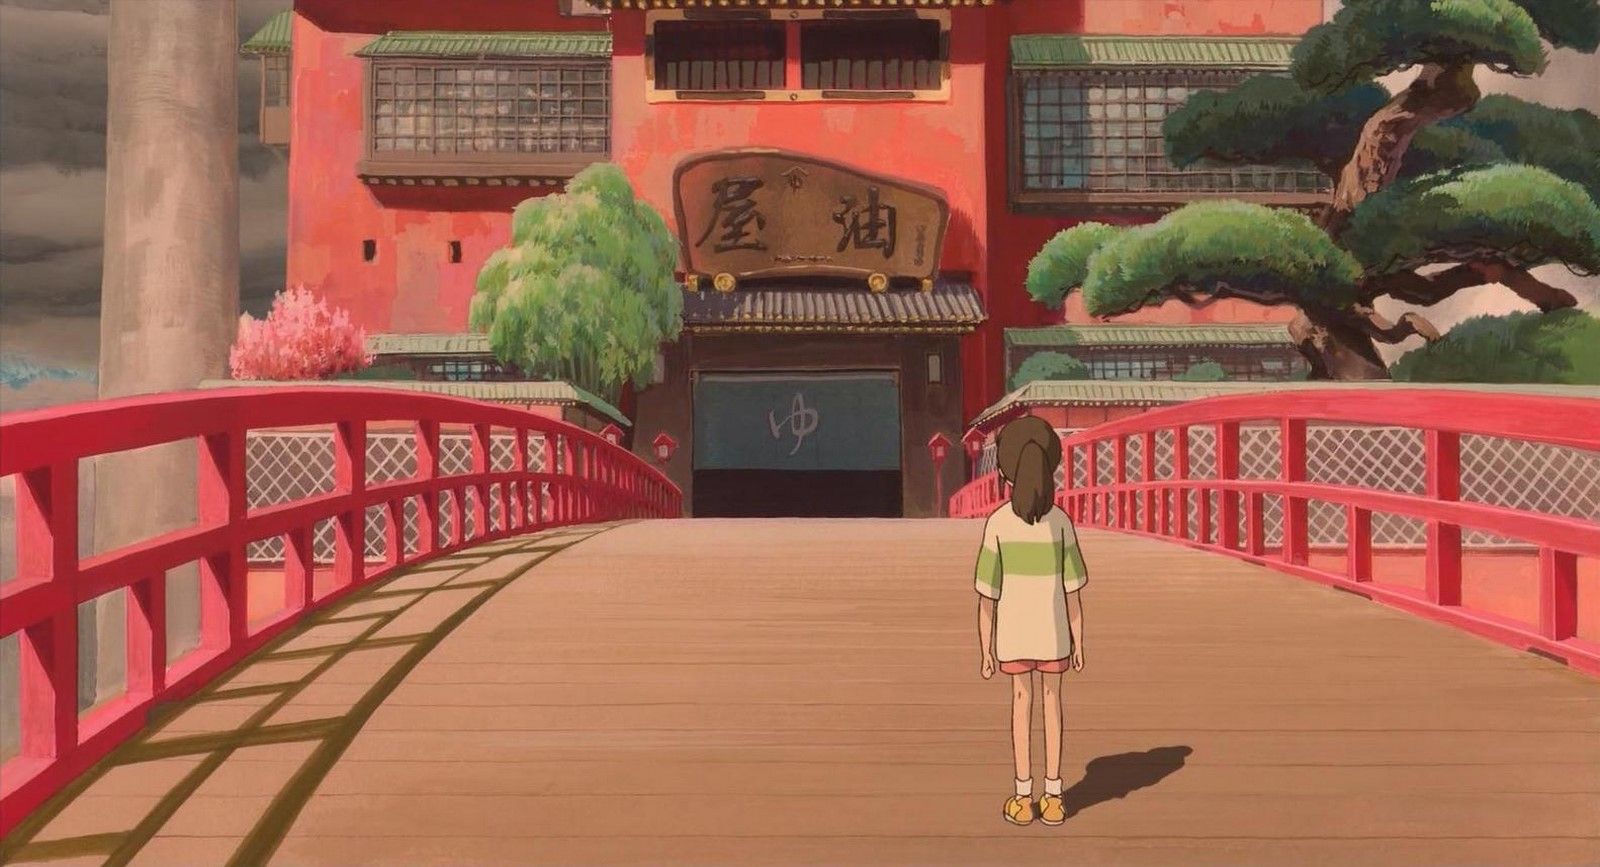 Chihiro standing on the bridge at the bathhouse.